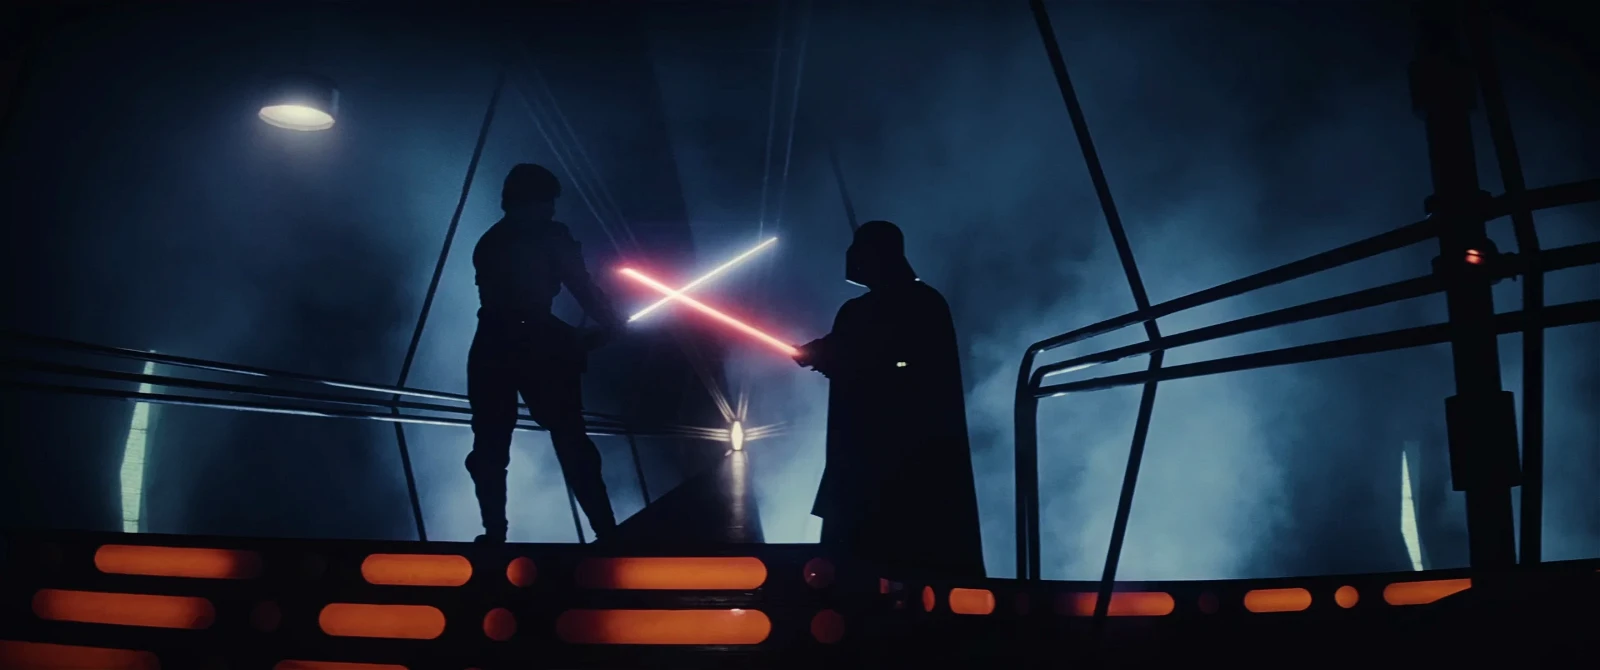 Luke Skywalker vs Darth Vader in The Empire Strikes Back